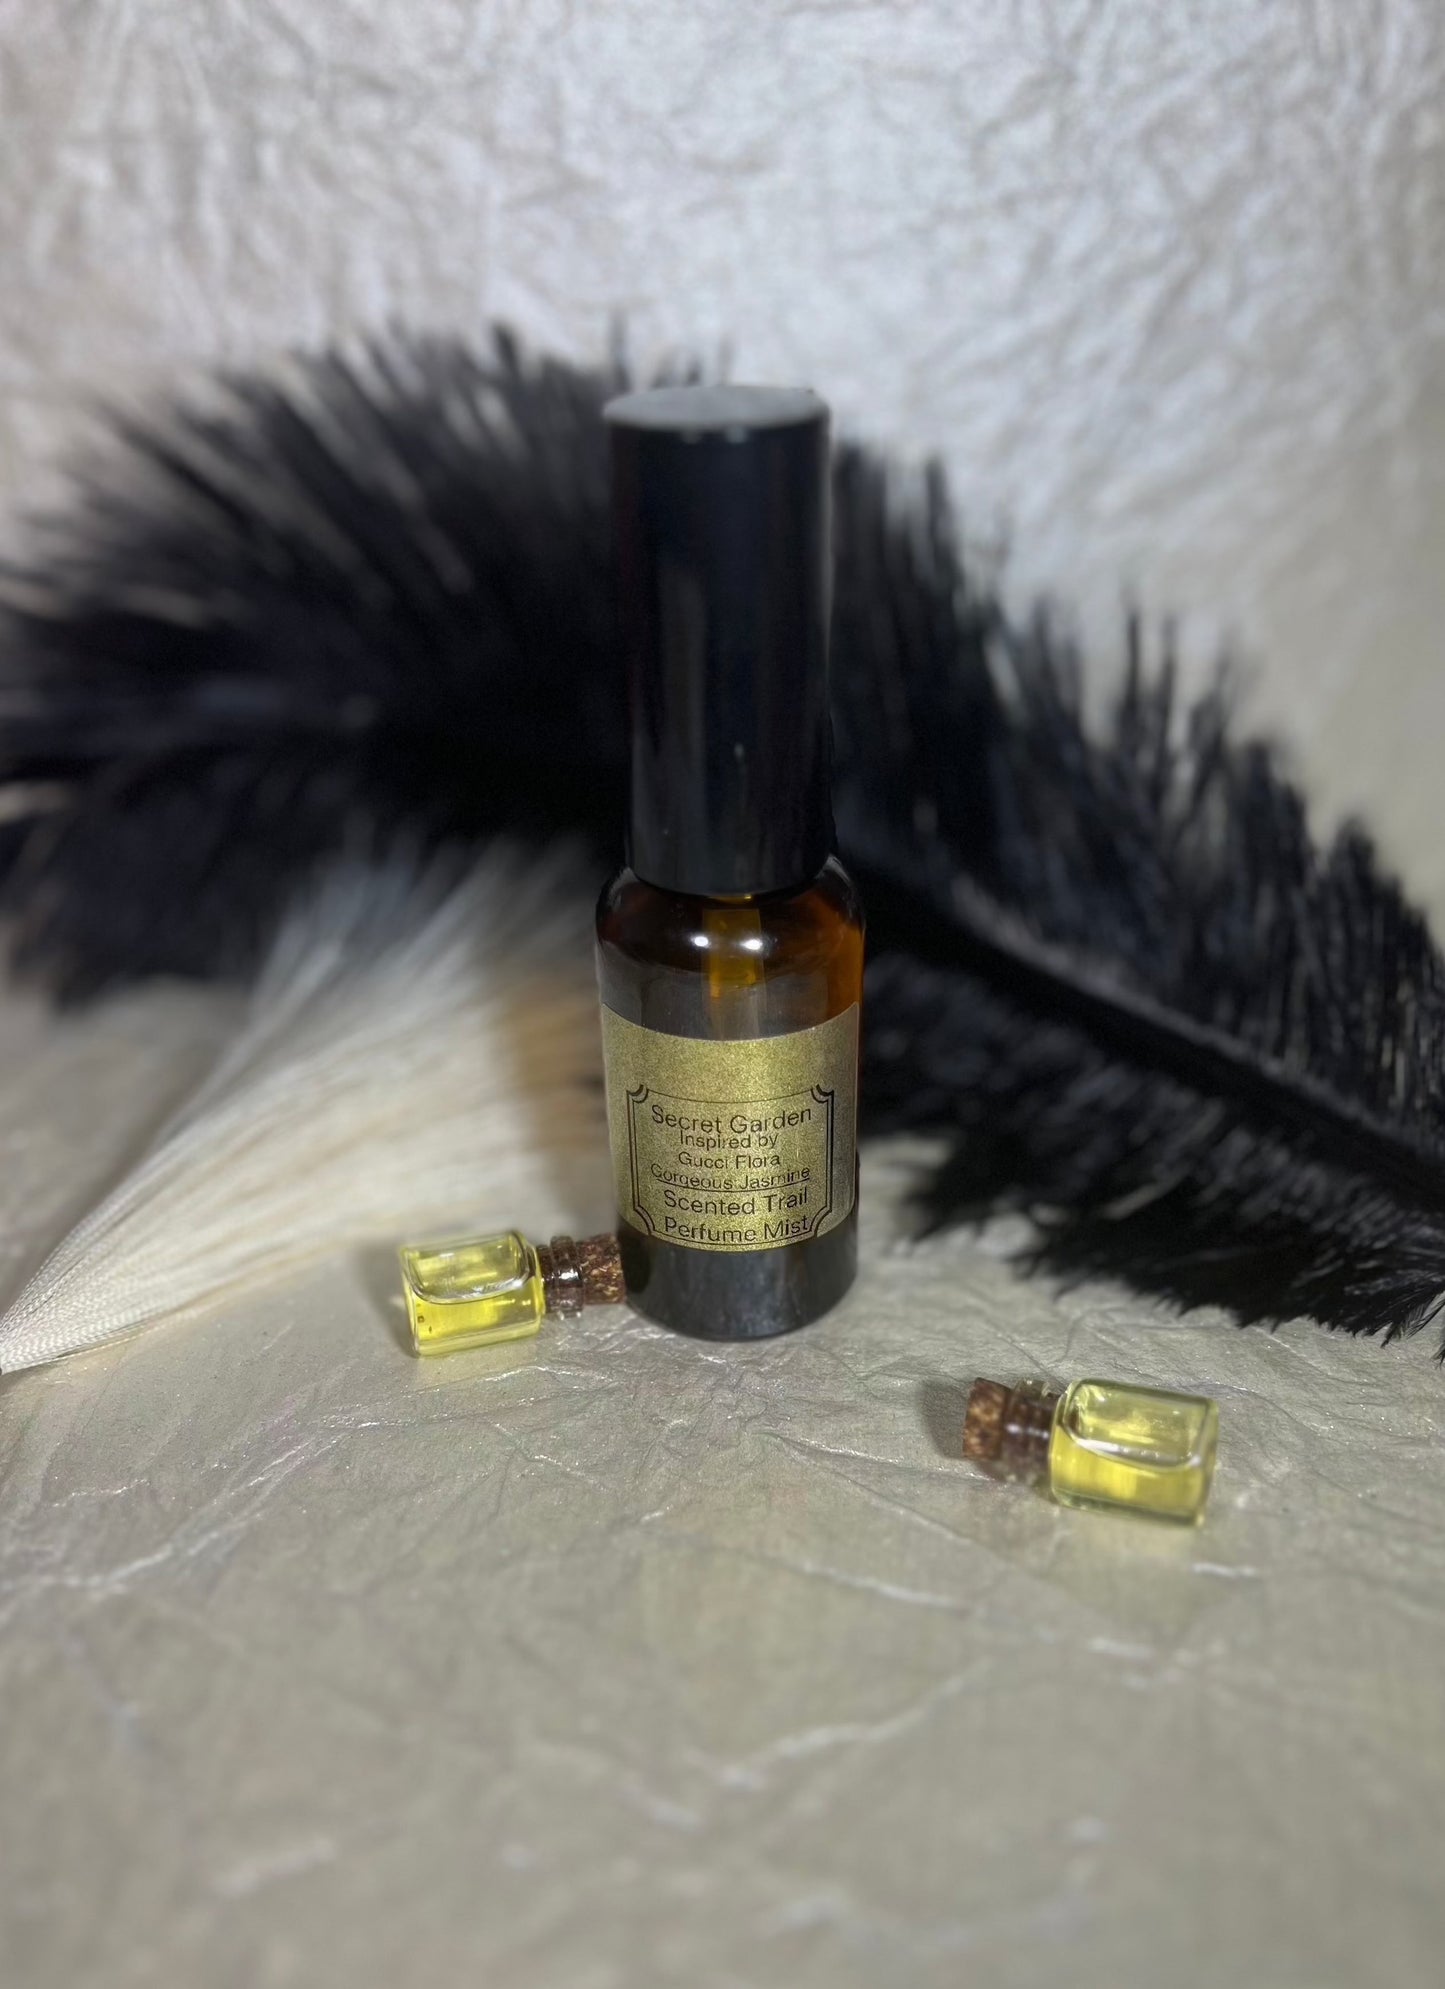 Secret Garden(Inspired by Gucci Flora Gorgeous Jasmine) - Premium Perfume Mist from Scented Trail Body Oils  - Just $5! Shop now at Scented Trail Body Oils 